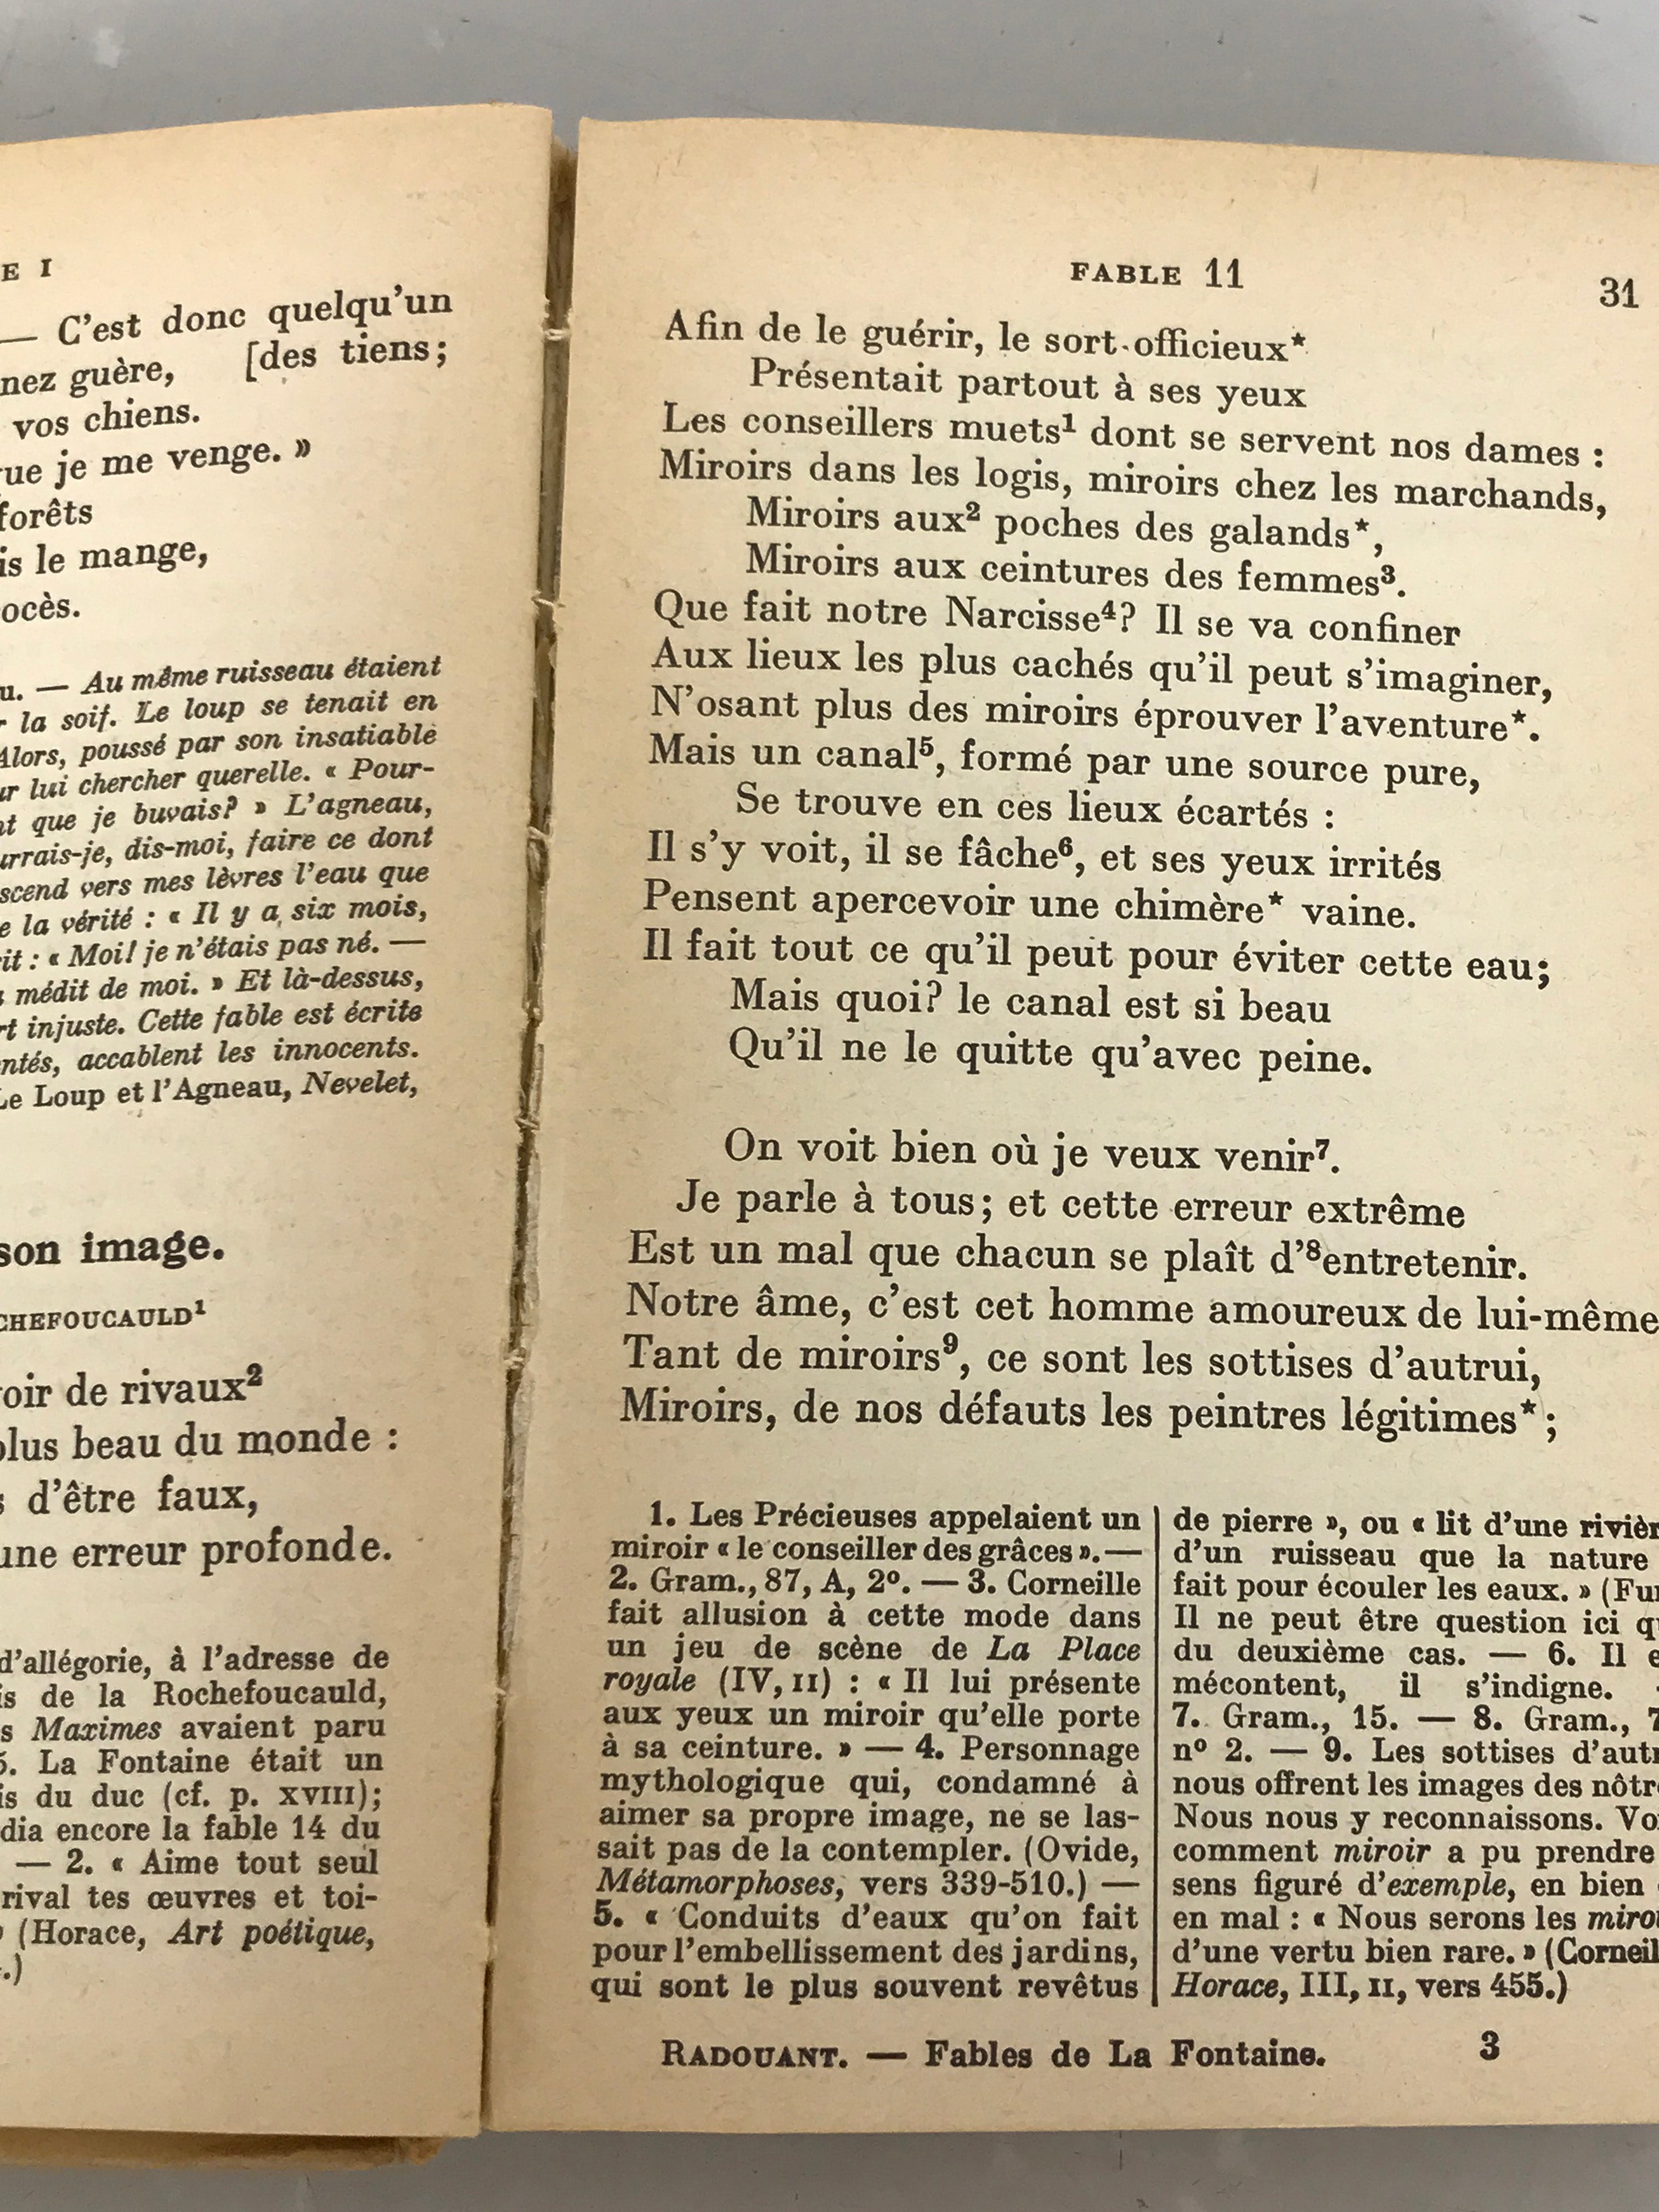 Lot of 2 French Language Classics 1929-1933